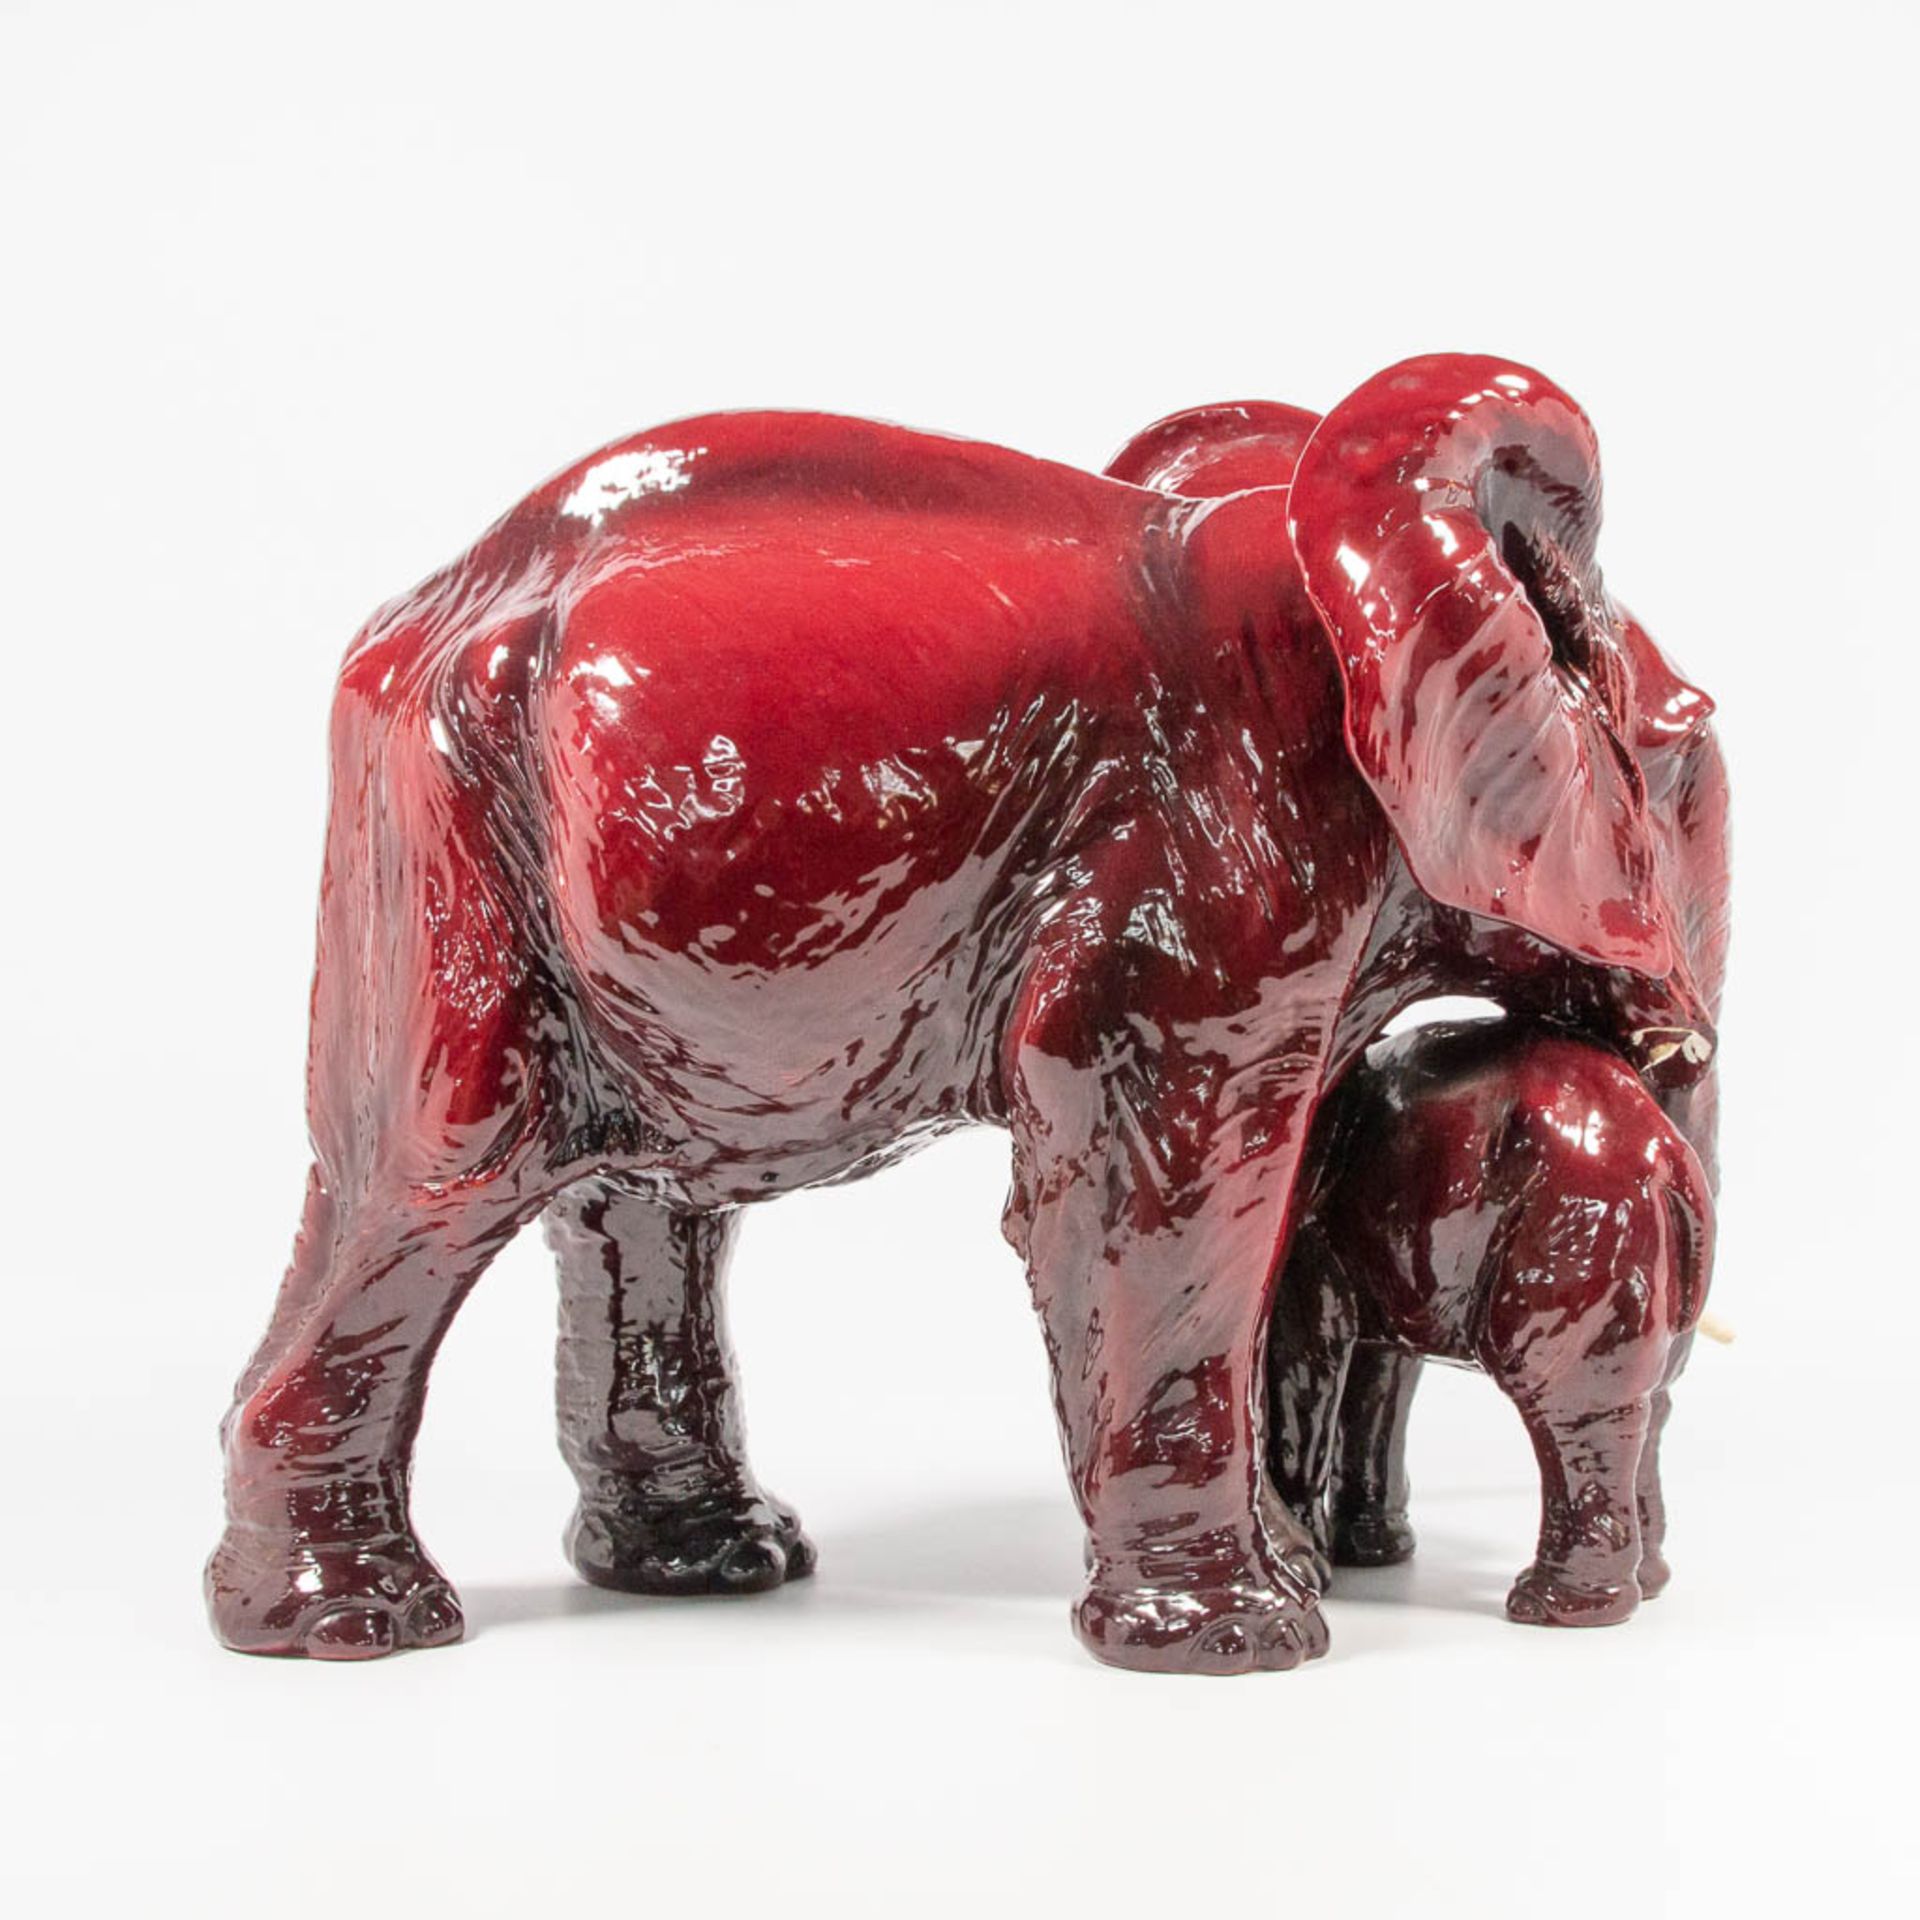 Guido CACCIAPUOTI (1892-1953) An elephant with calf made of red glazed ceramics - Image 16 of 25